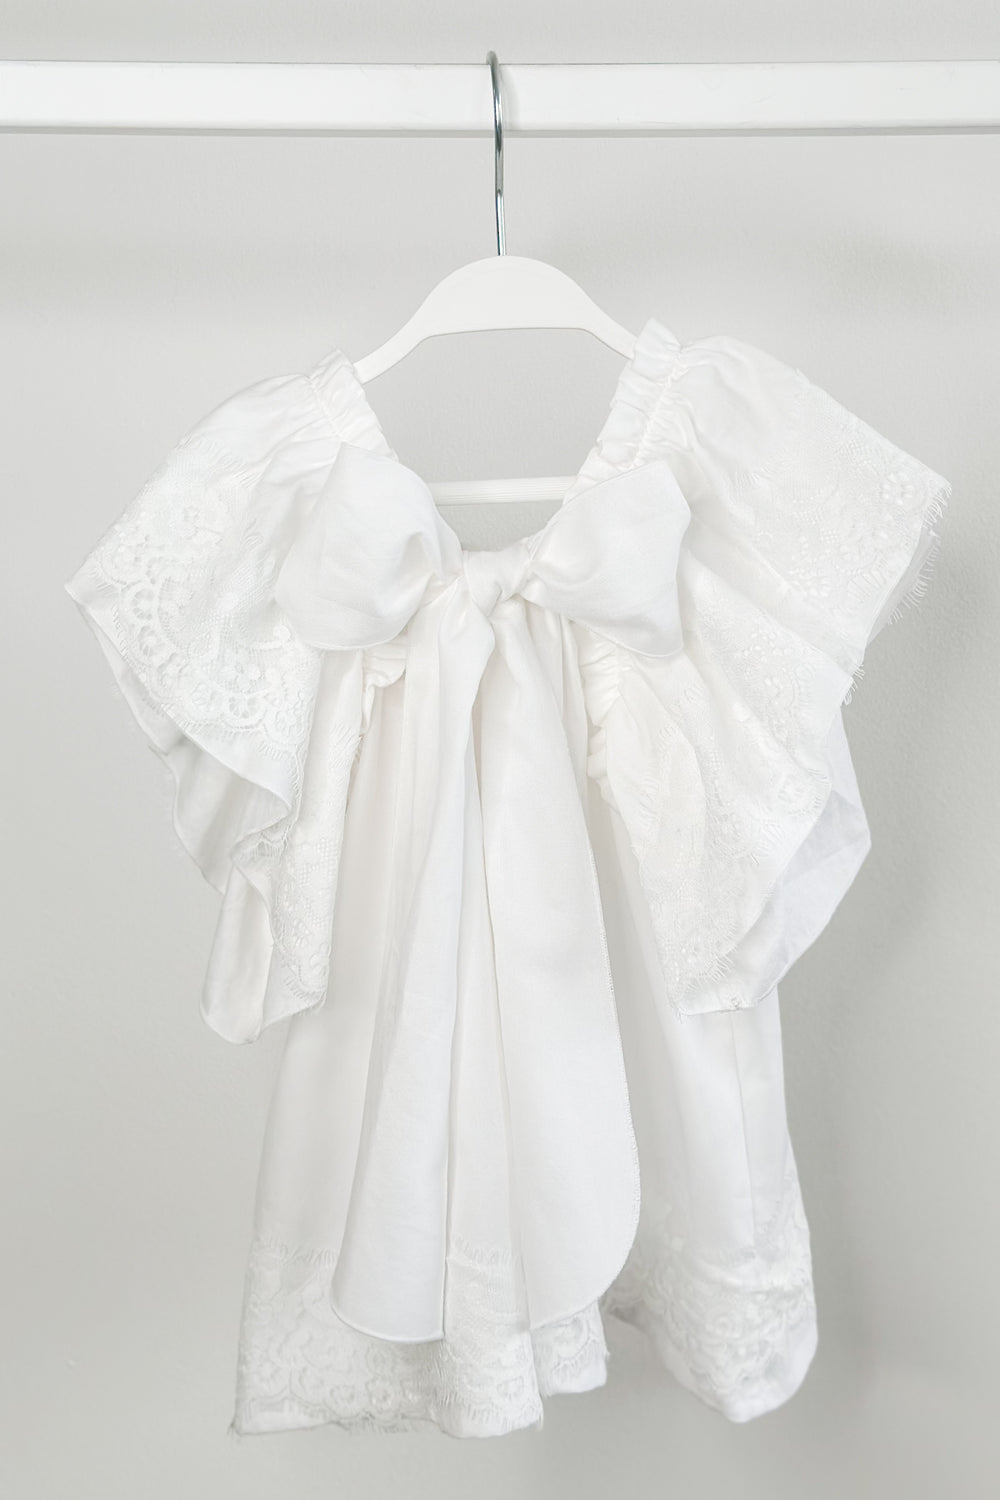 Phi "Syleste" White Lace Dress | Millie and John